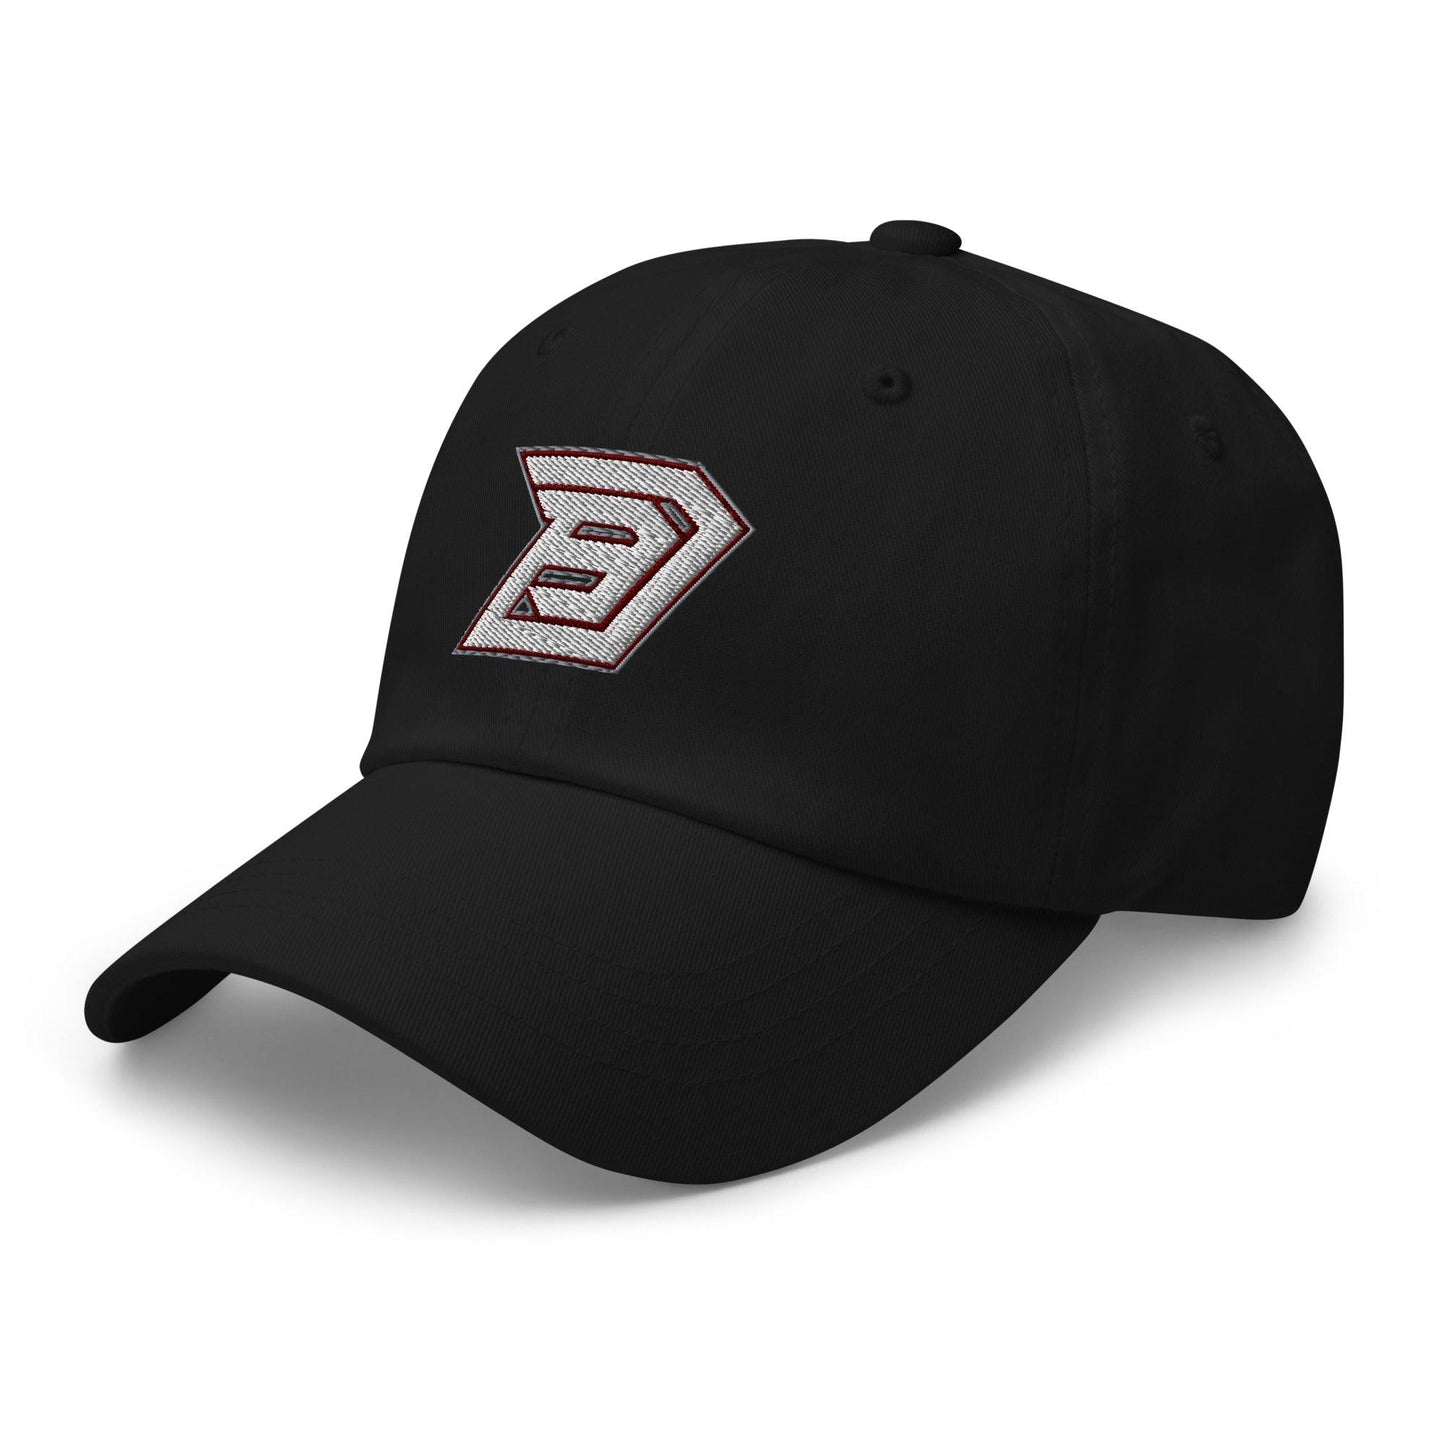 Daniel Brooks “Signature” hat - Fan Arch